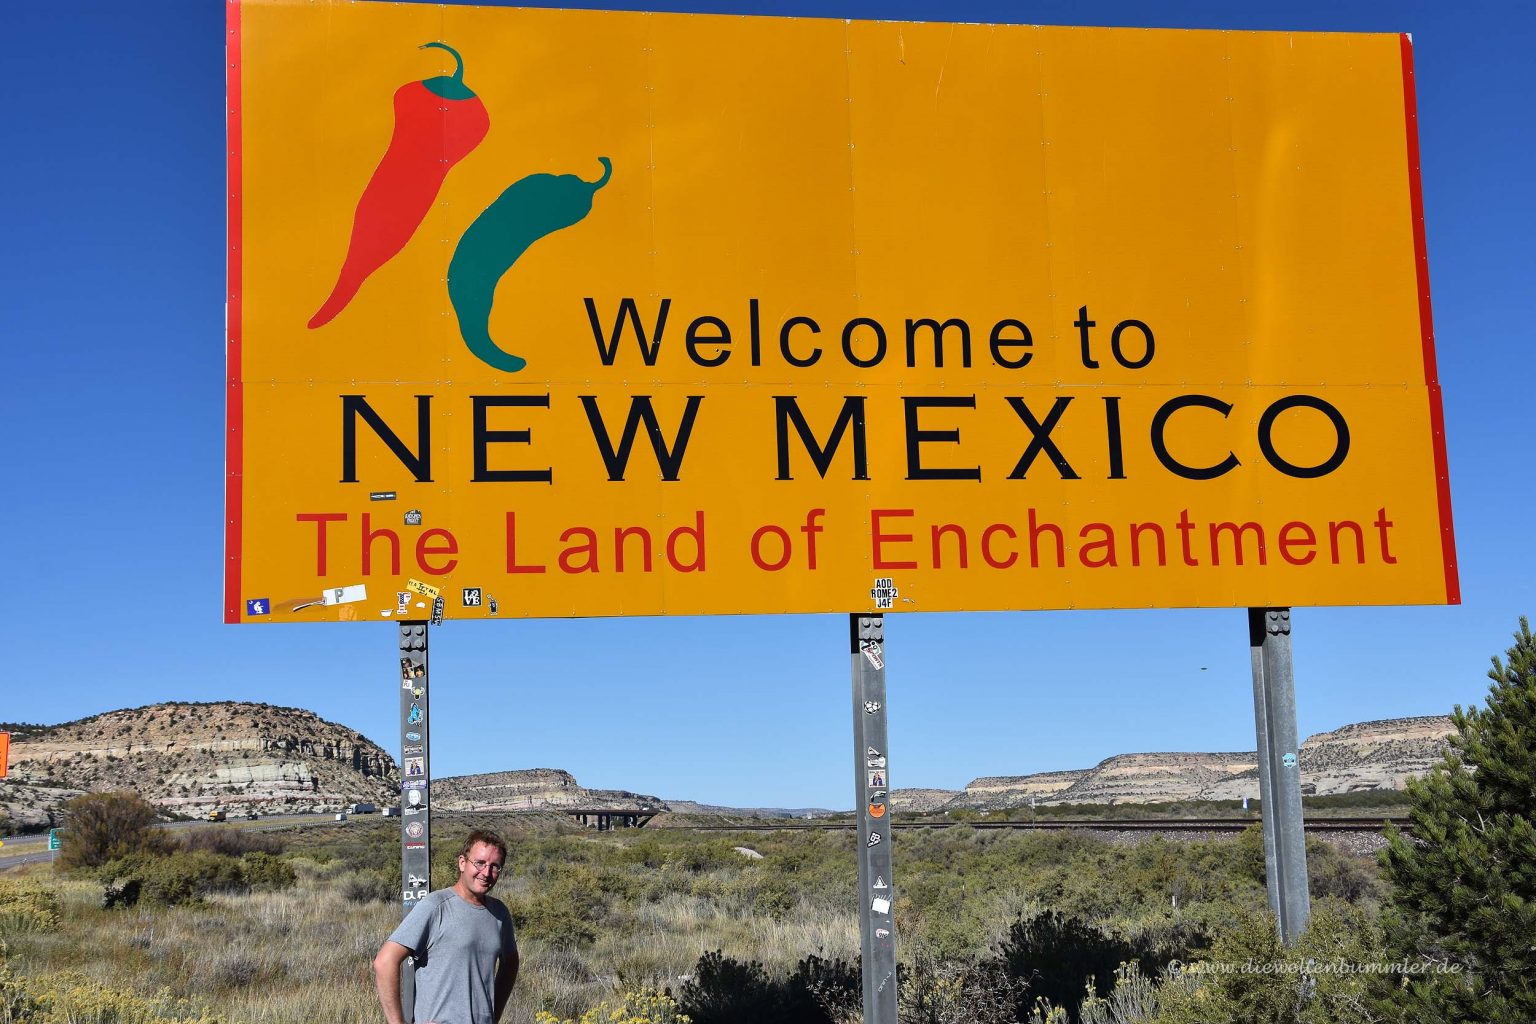 Willkommen in New Mexico